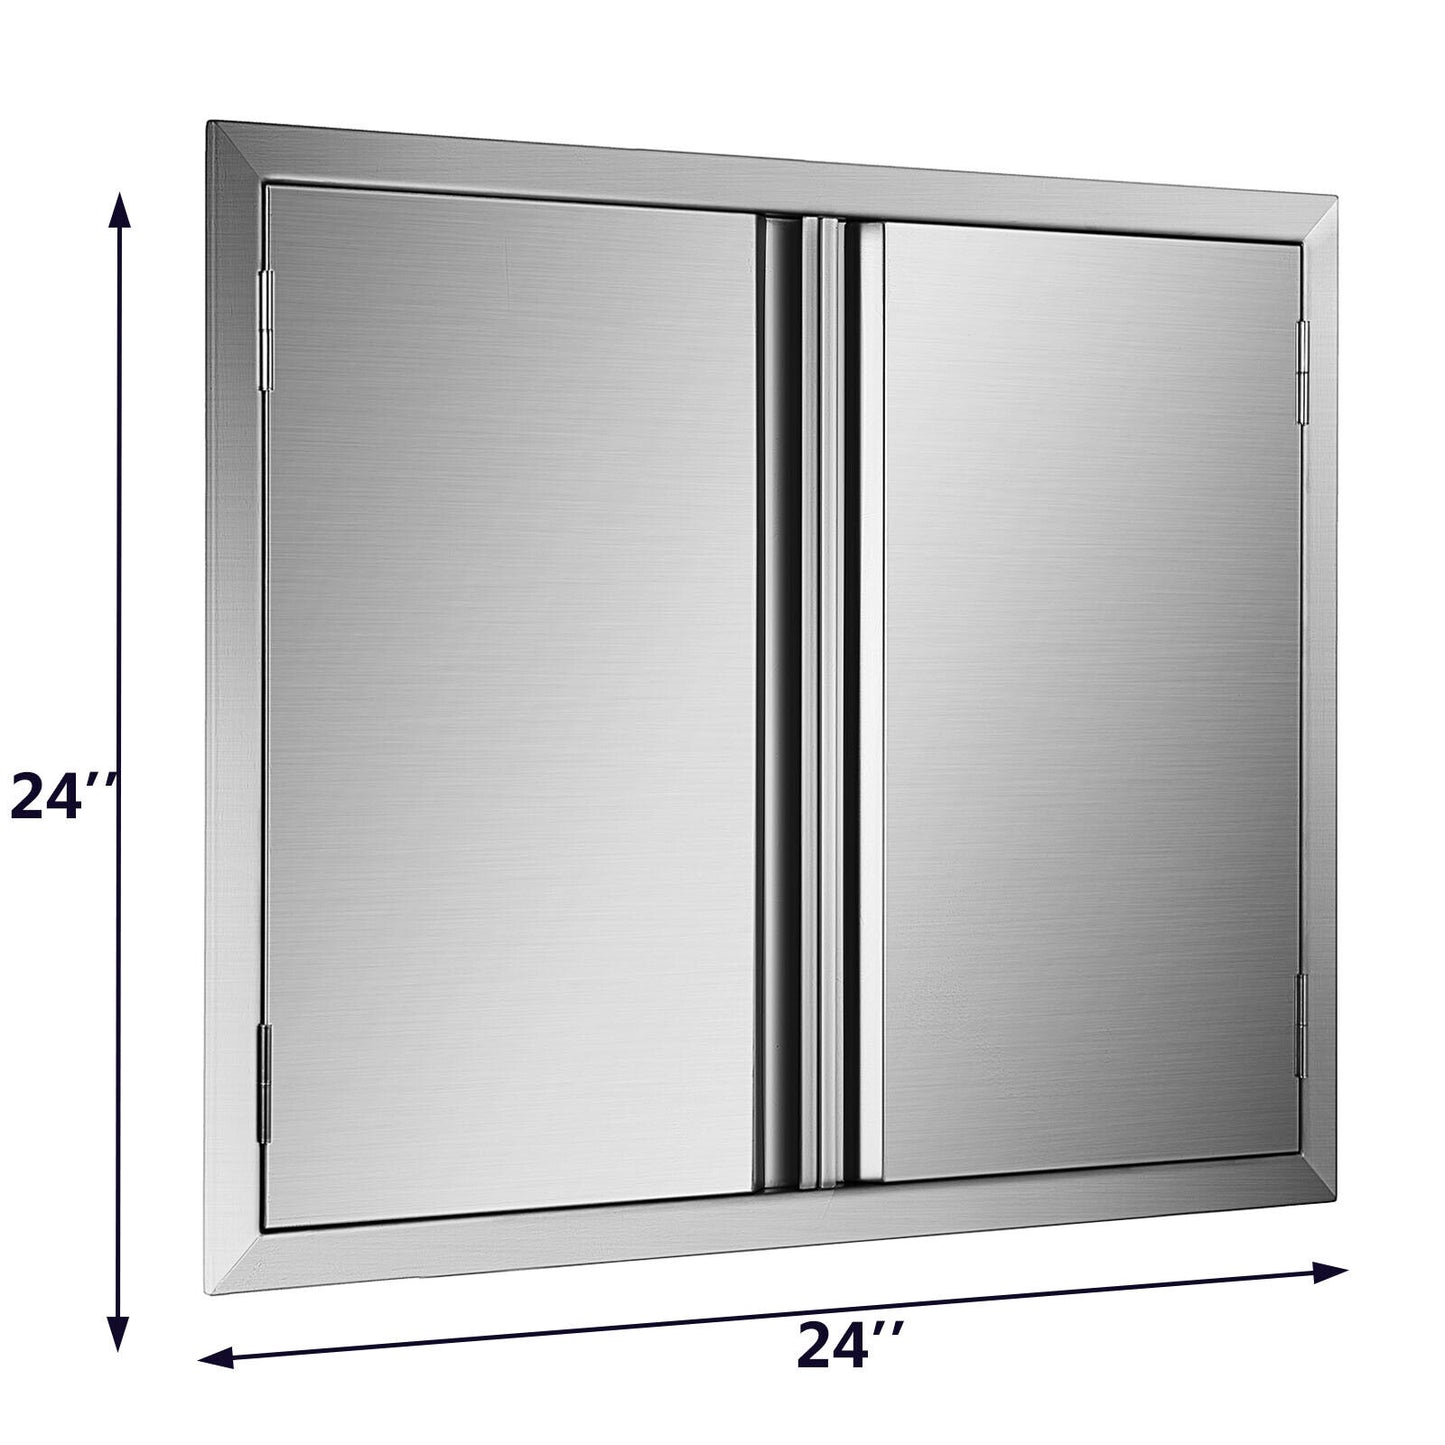 24"x24" Outdoor Kitchen BBQ Island Components Stainless Steel Double Access Door